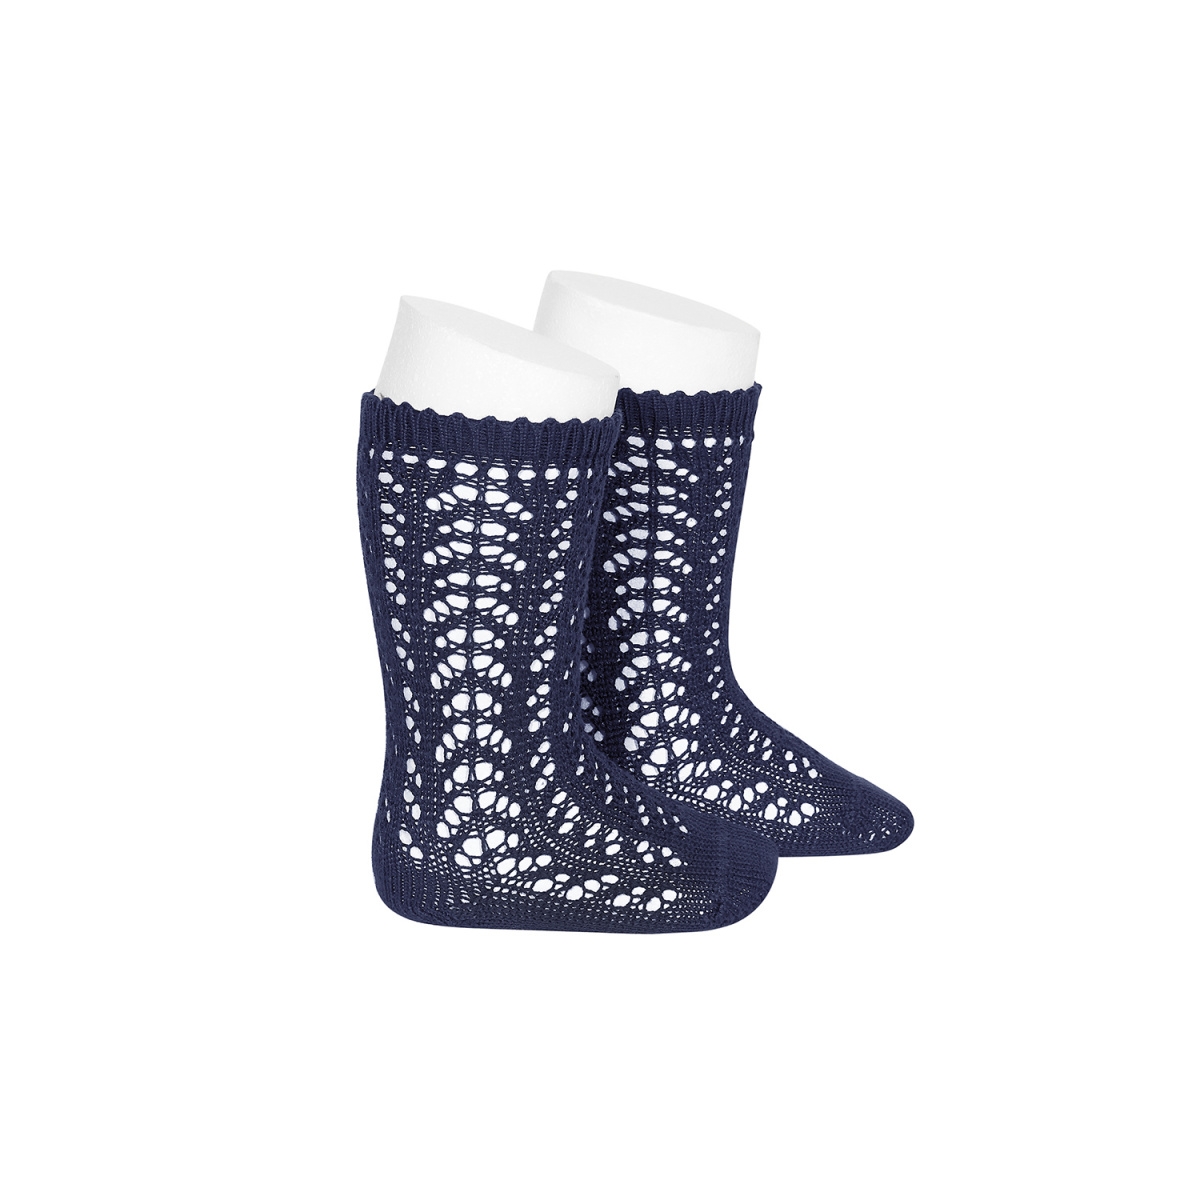 Condor Cotton Knee High Socks navy blue 2.518/2_480 